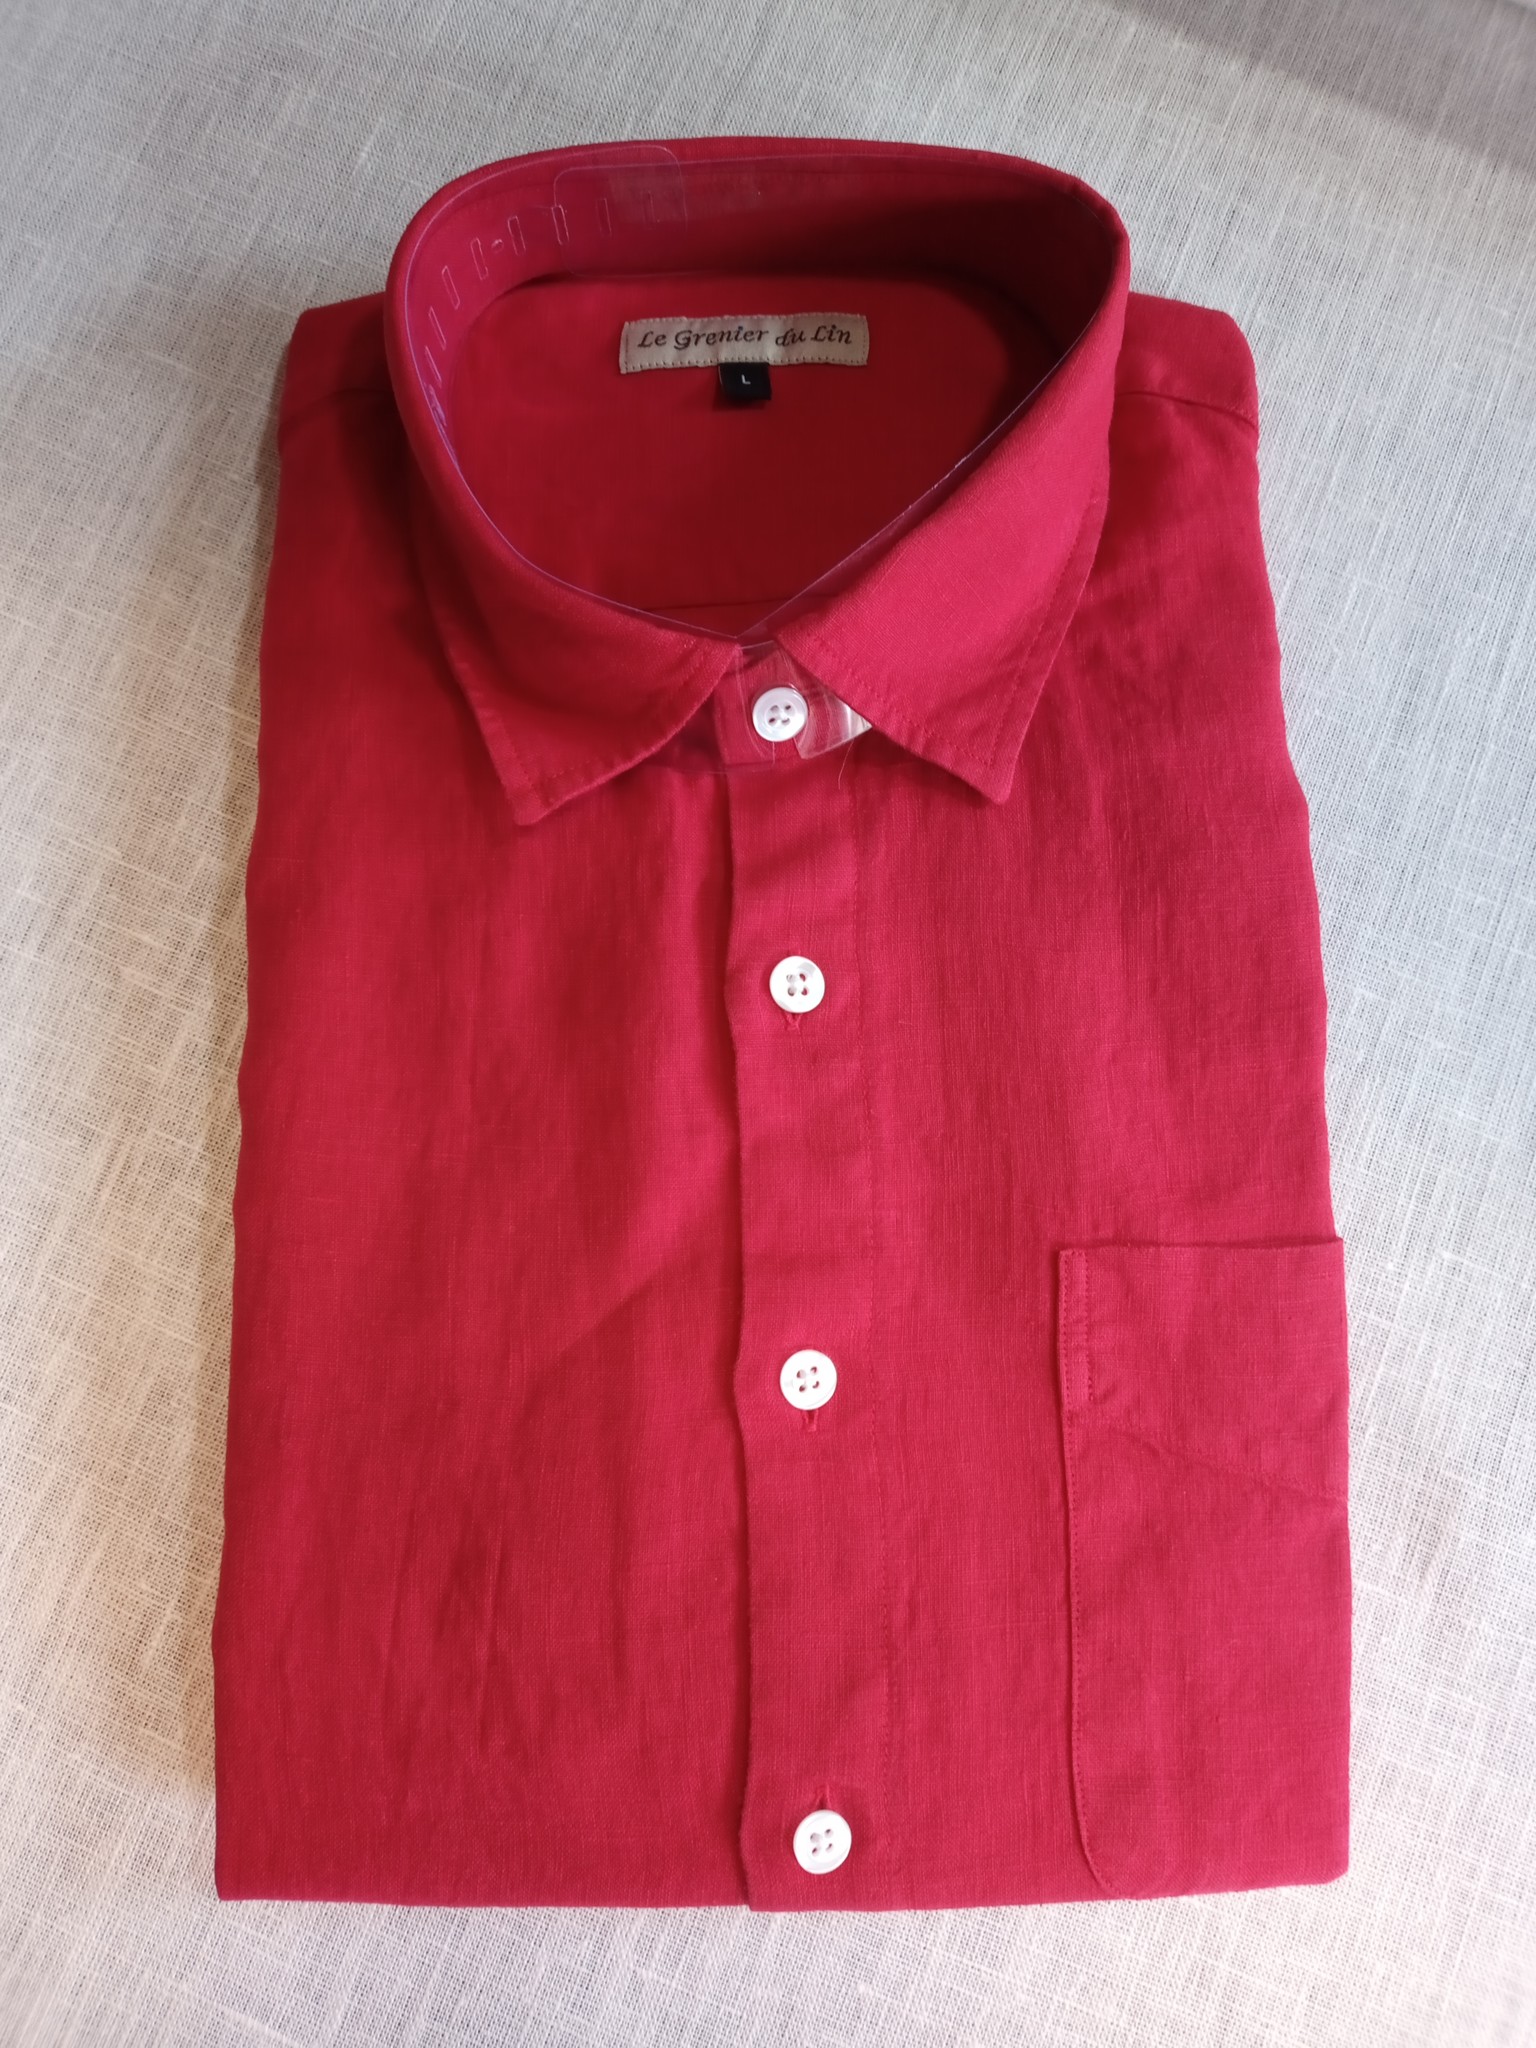 Le grenier du lin Long sleeve linen shirt red